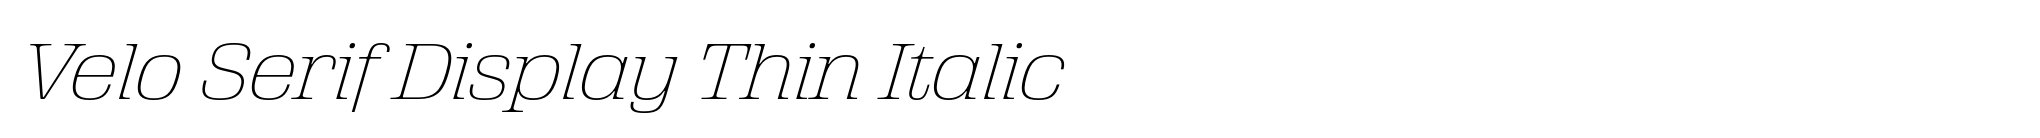 Velo Serif Display Thin Italic image